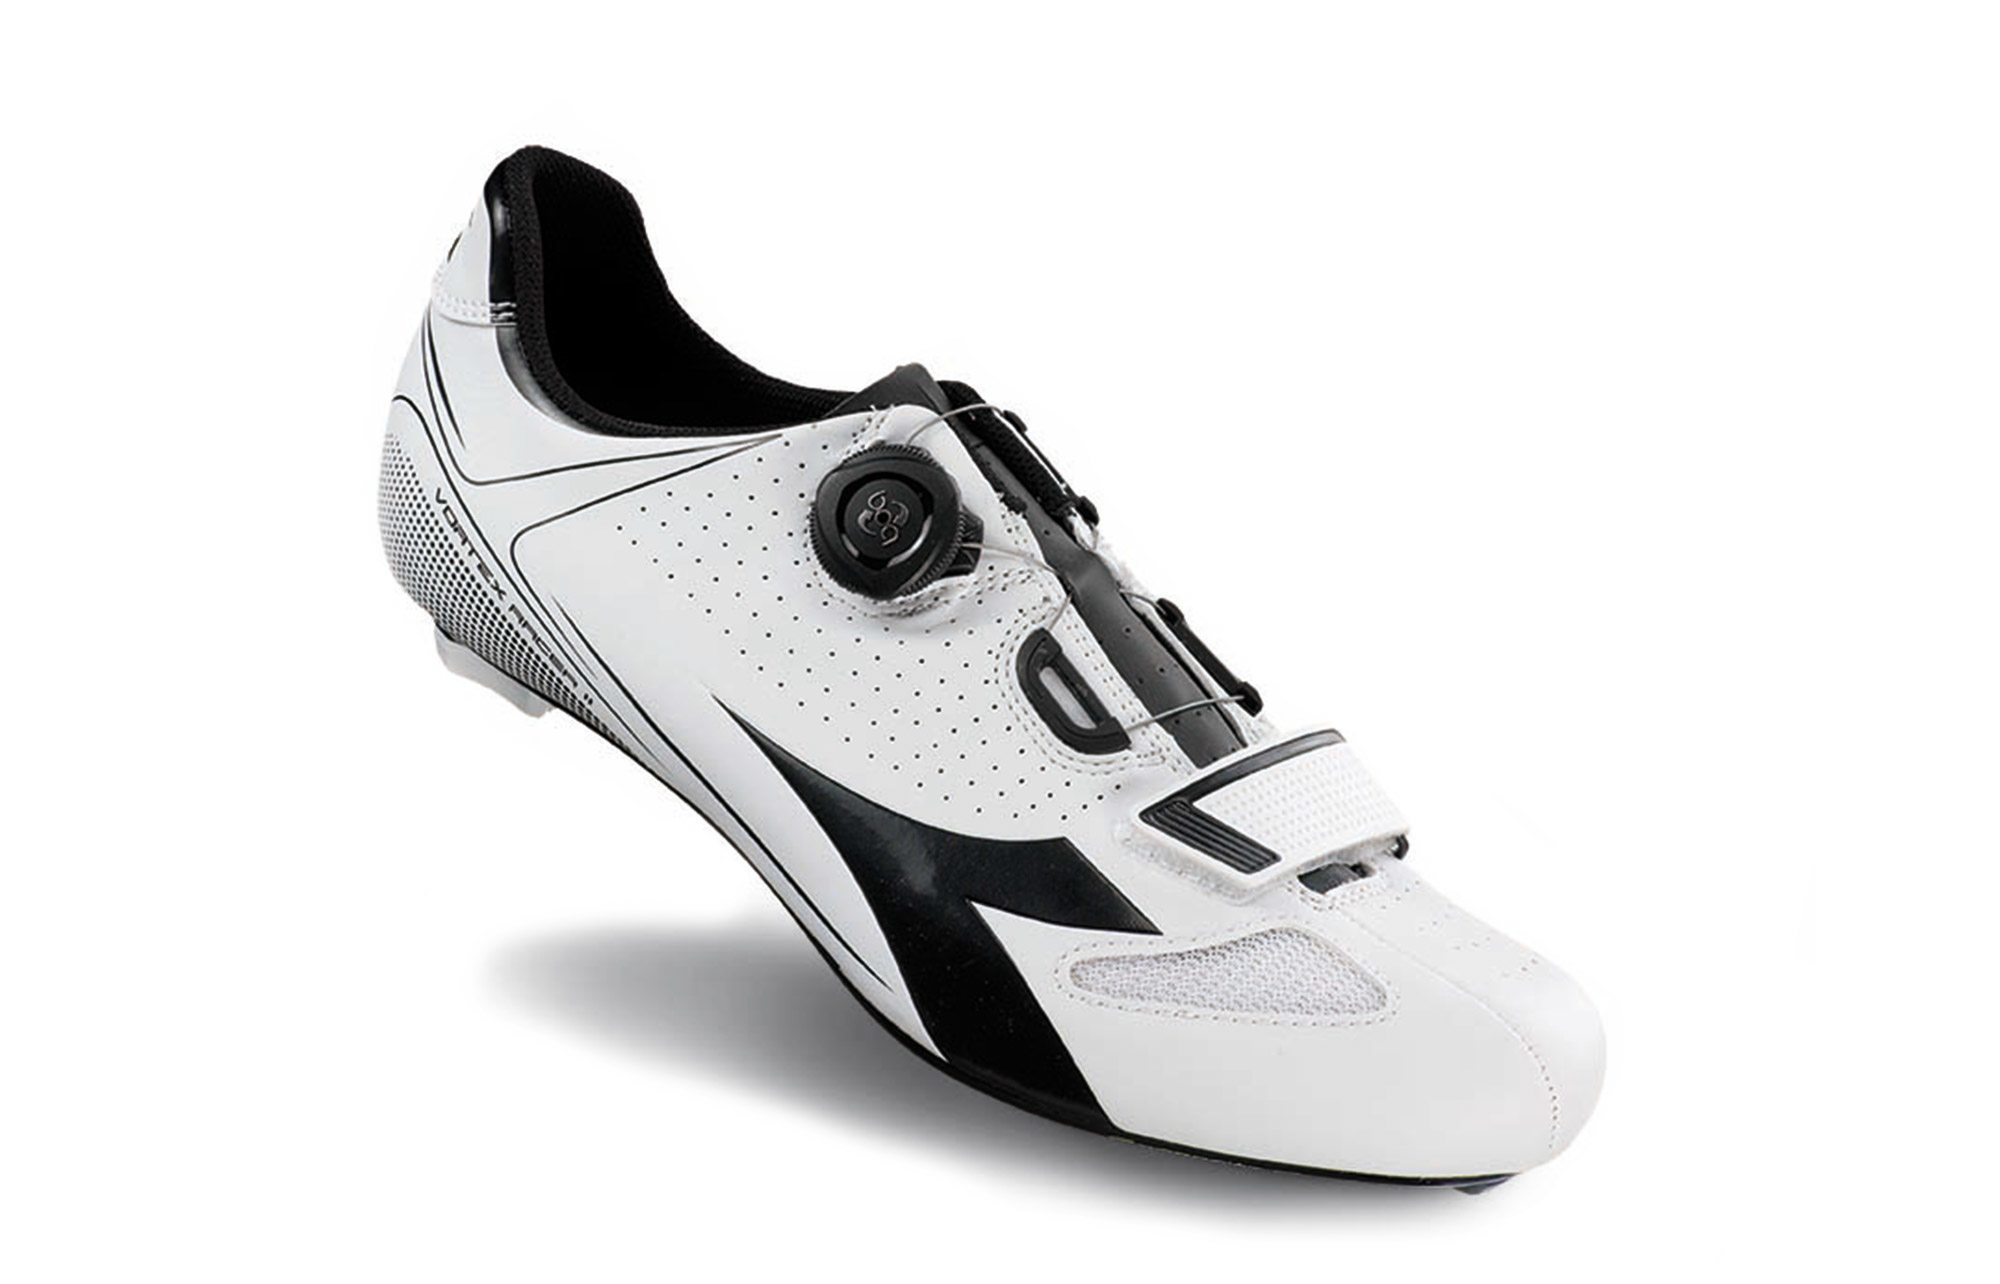 Gaseous software Rodeo Diadora Vortex-Racer II Shoes | R&A Cycles